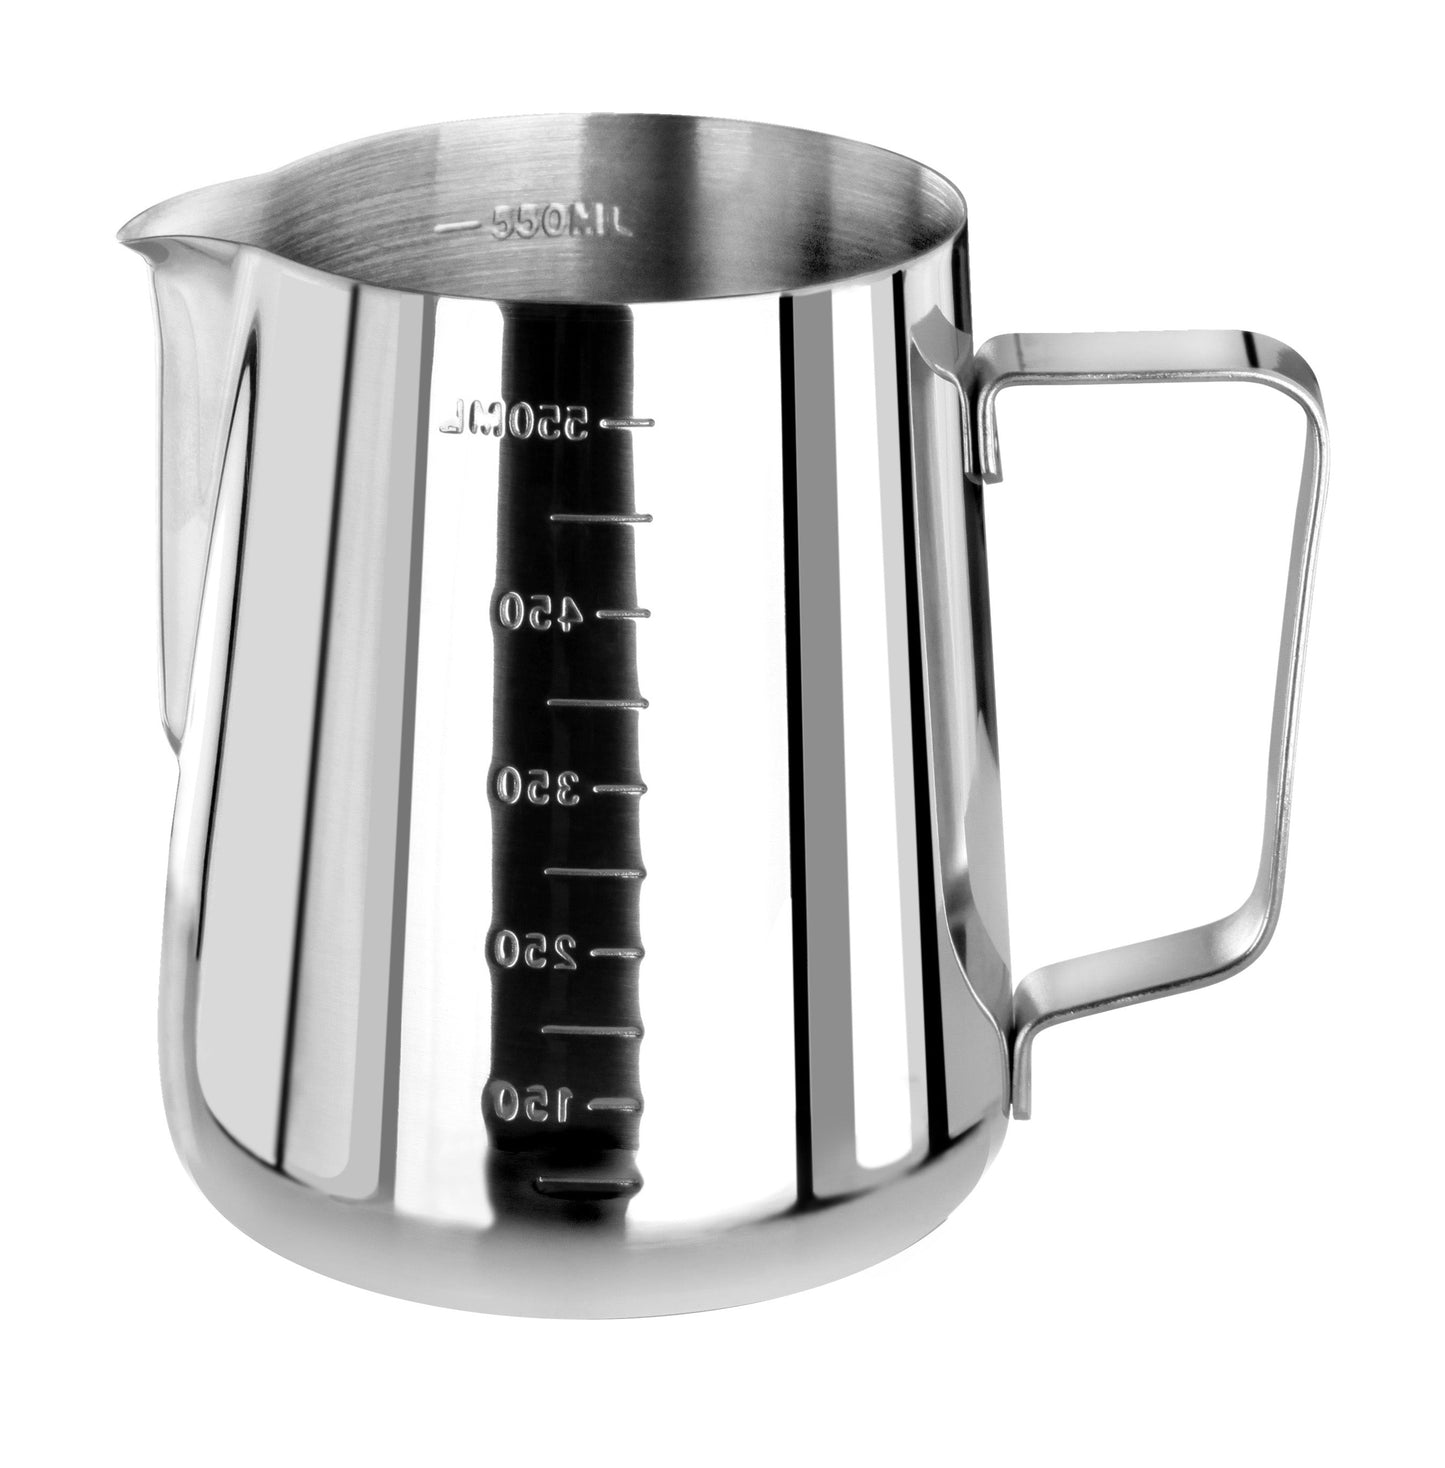 Cuisinox Cuisinox Stainless Steel Measuring Cup/Creamer